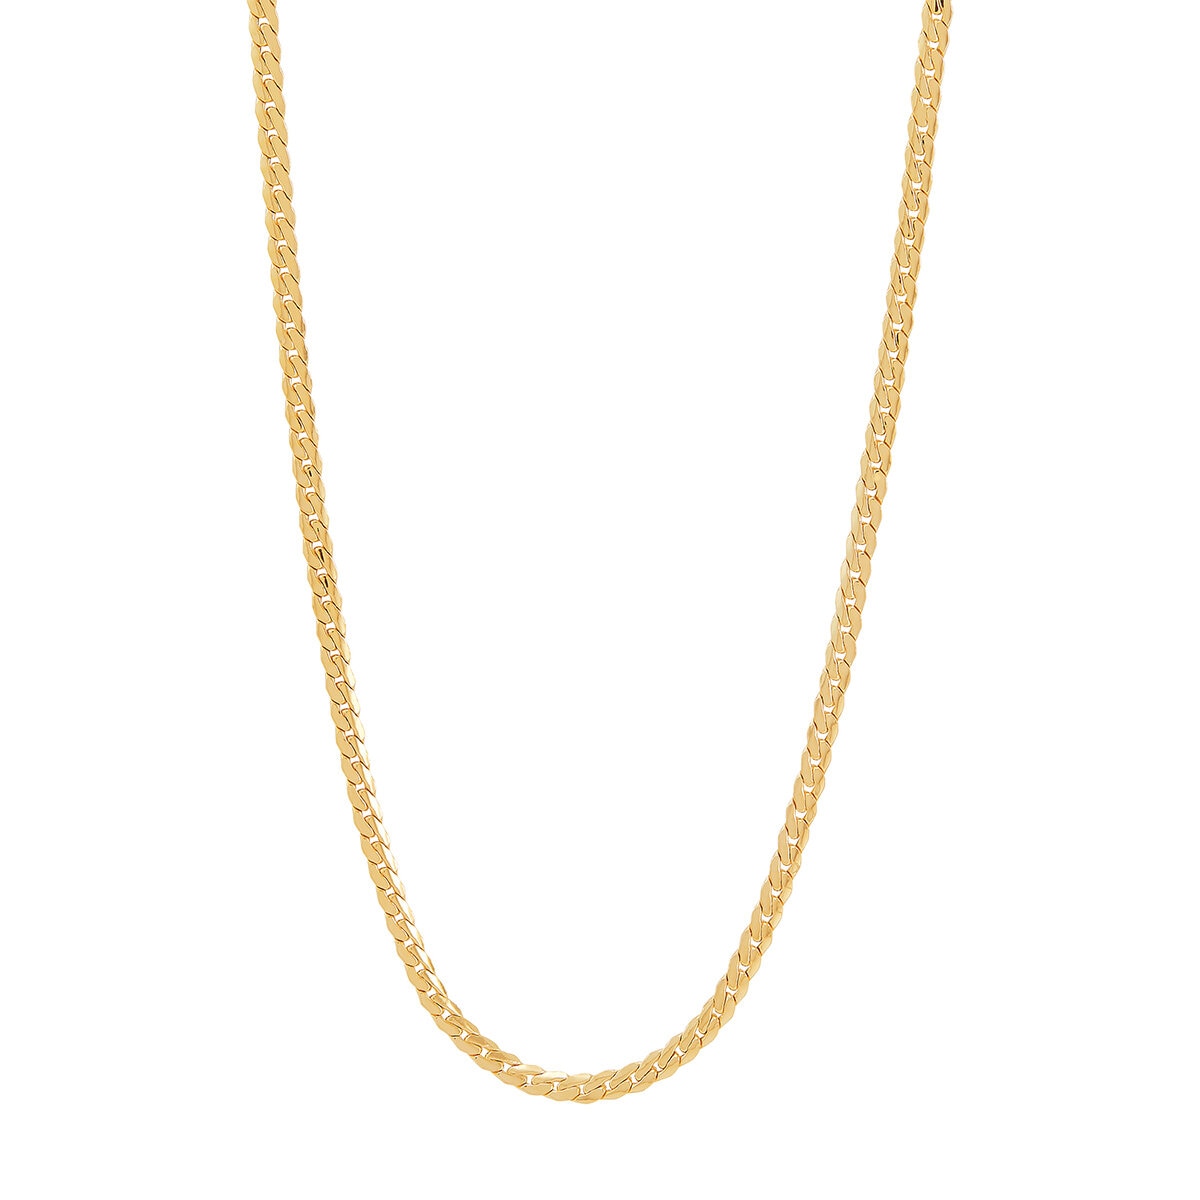 Collar Oro Amarillo De 14kt 508cm Costco México 7496